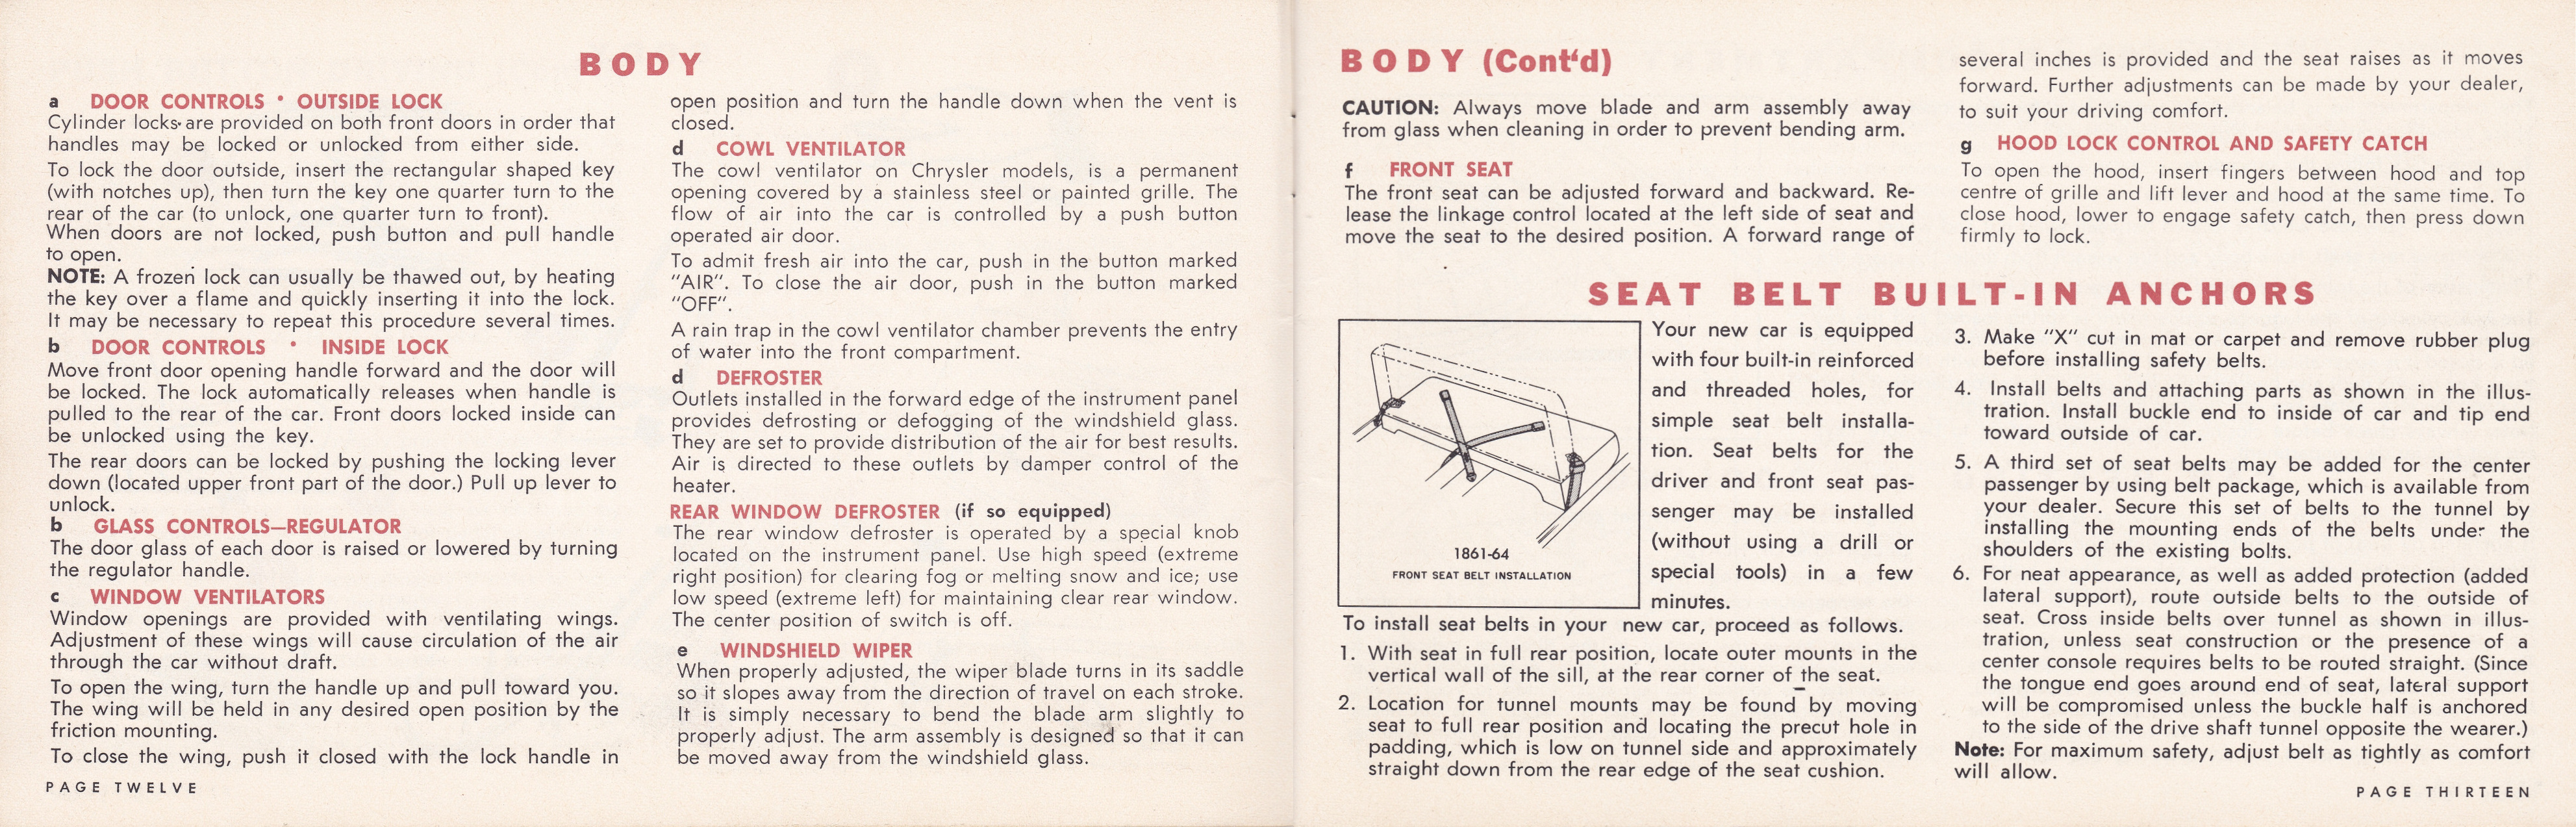 1964_Chrysler_Owners_Manual_Cdn-12-13